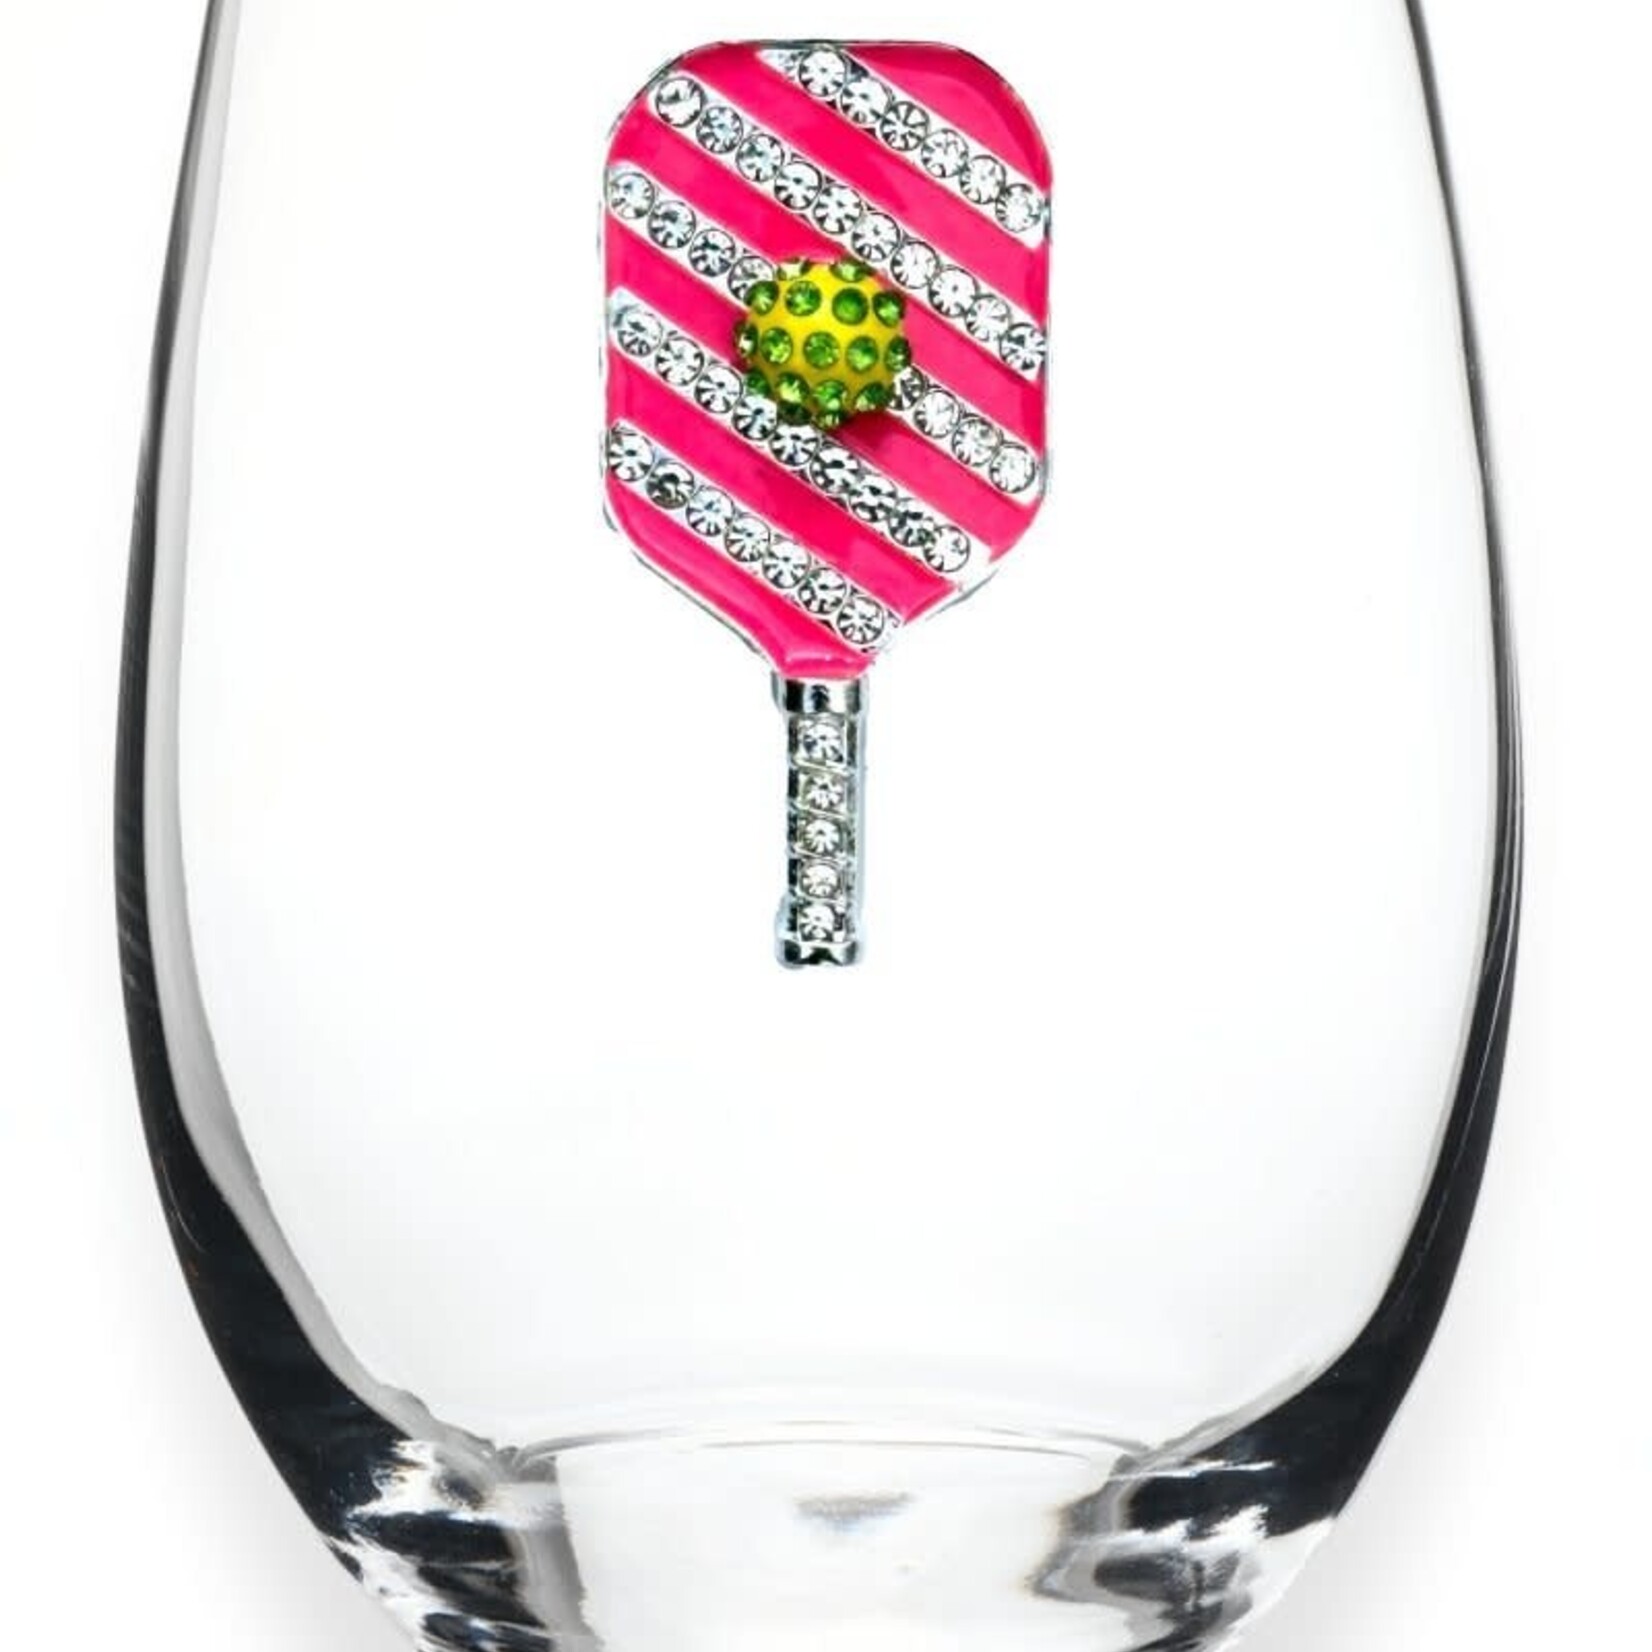 TheQueensJewels Stemless Jeweled Wine Glass